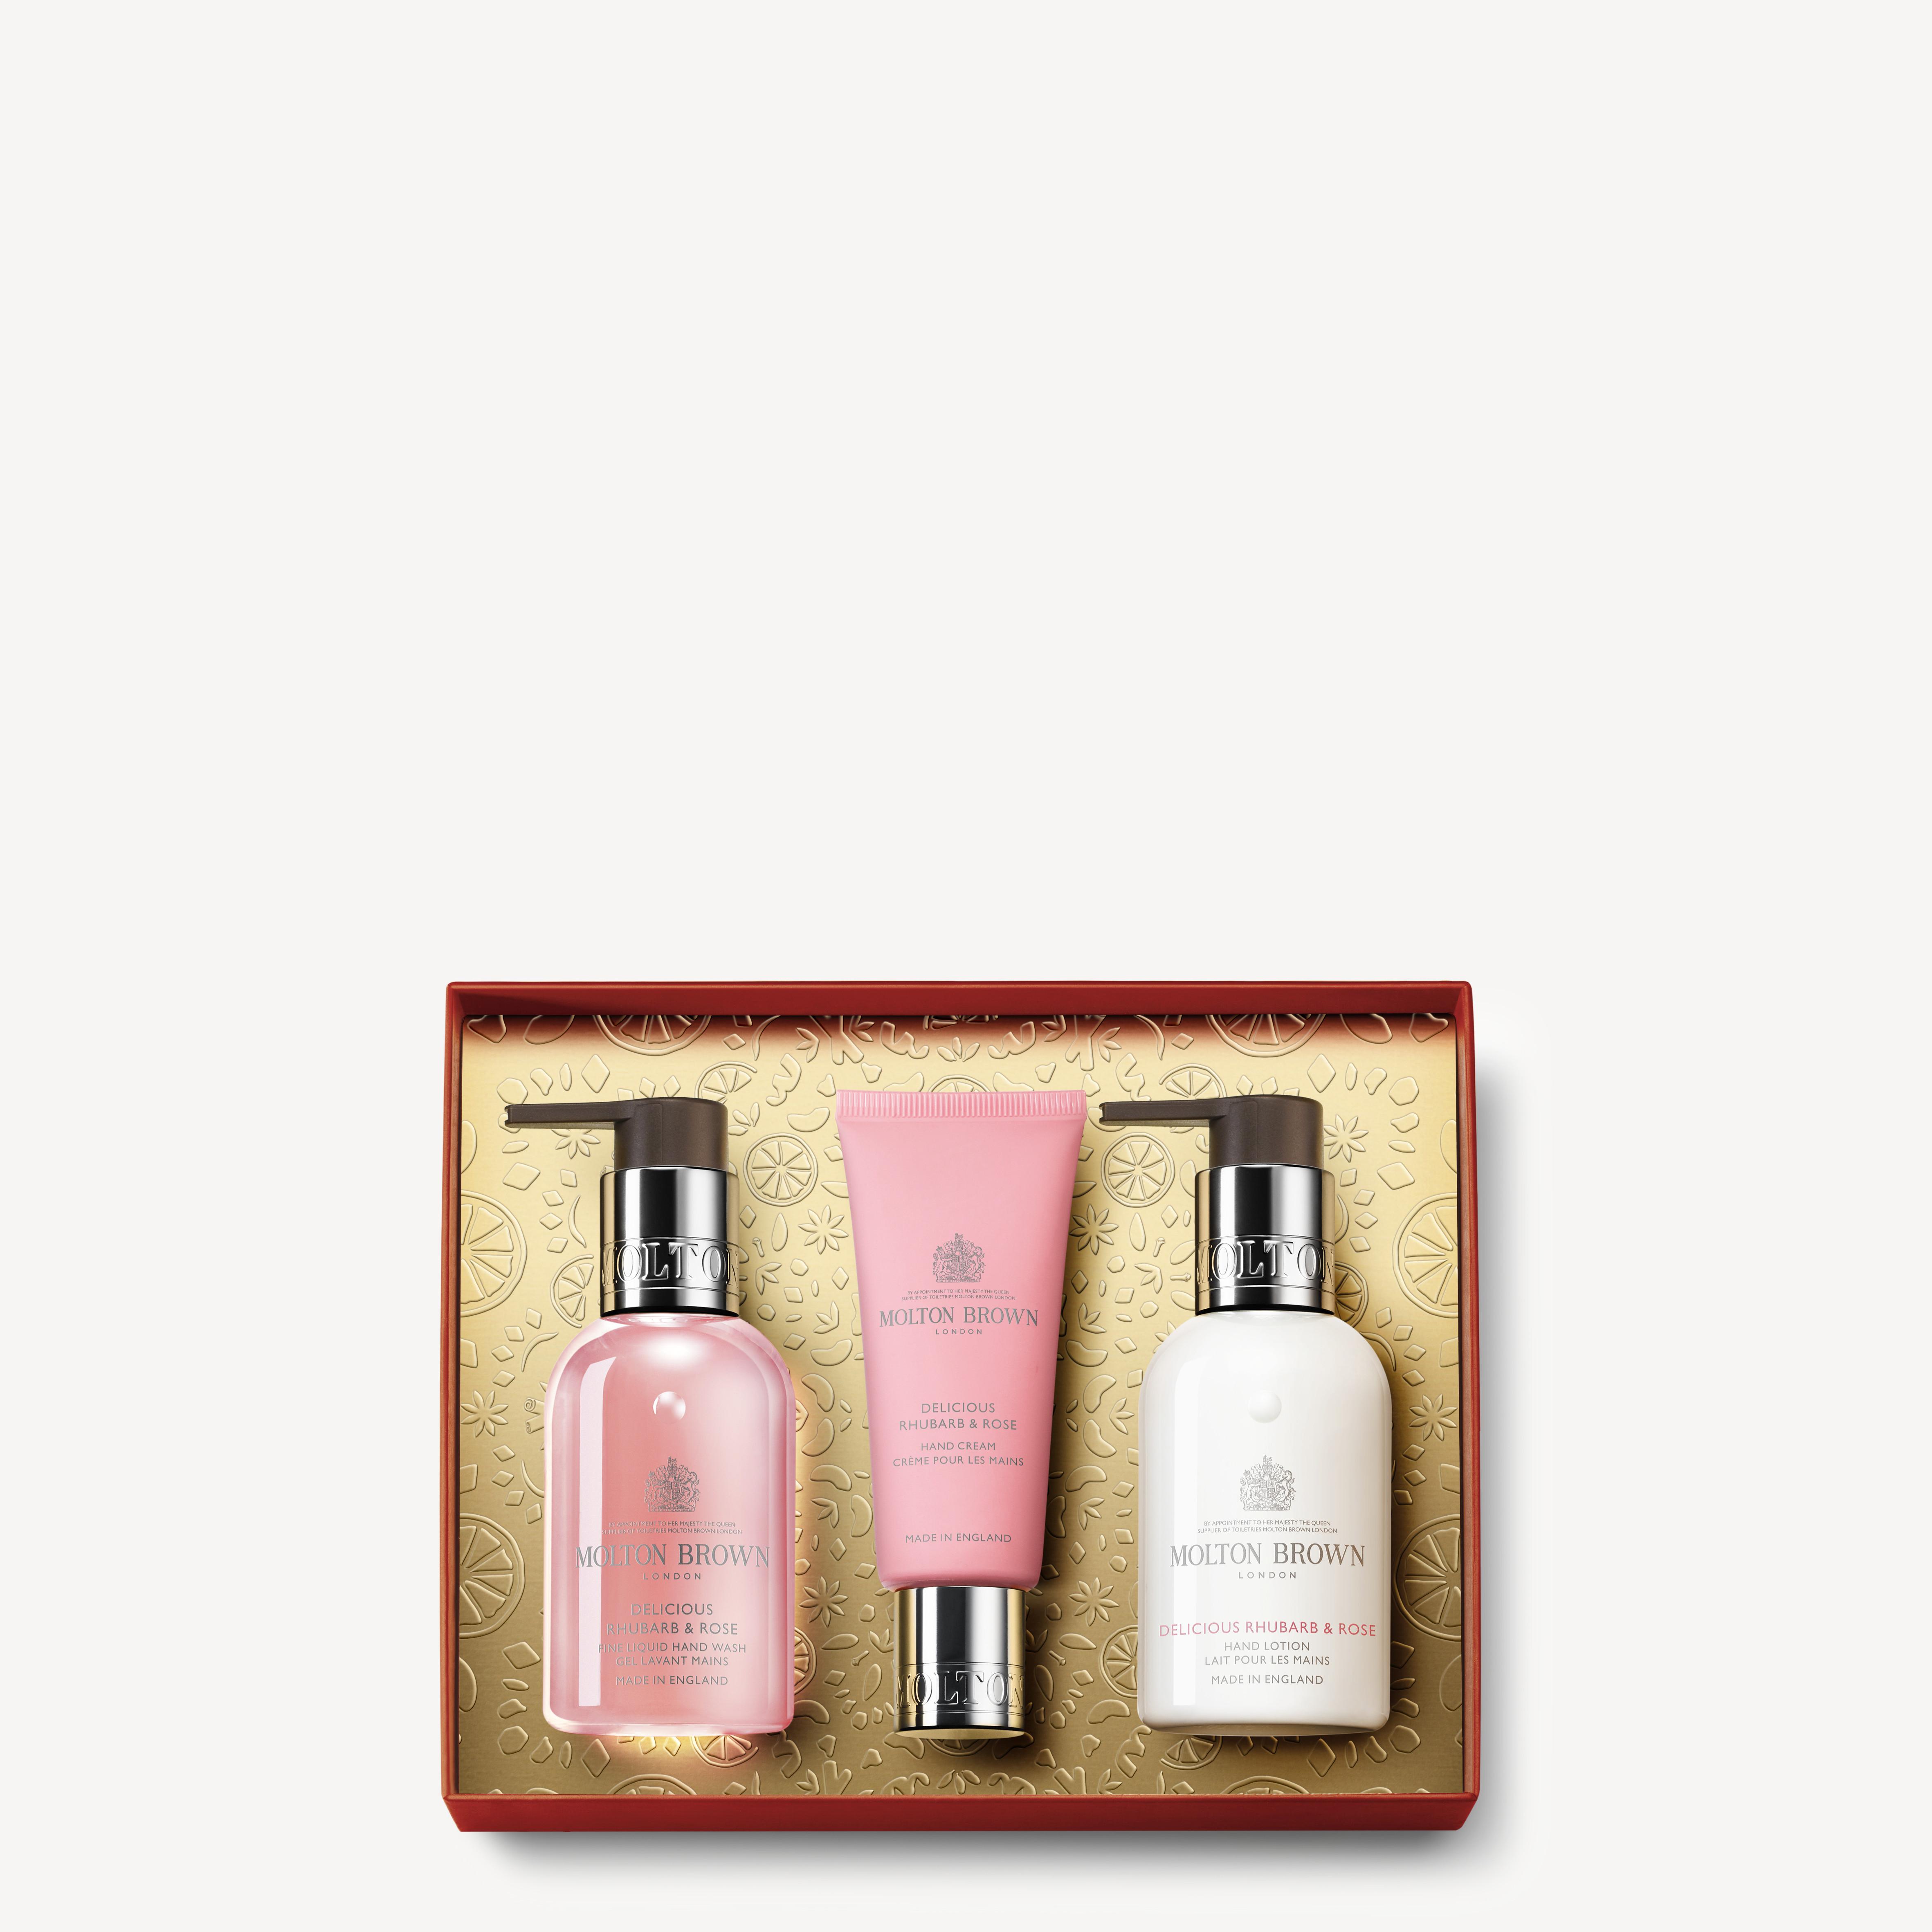 Women's fragrance, gift sets - Macys Style Crew